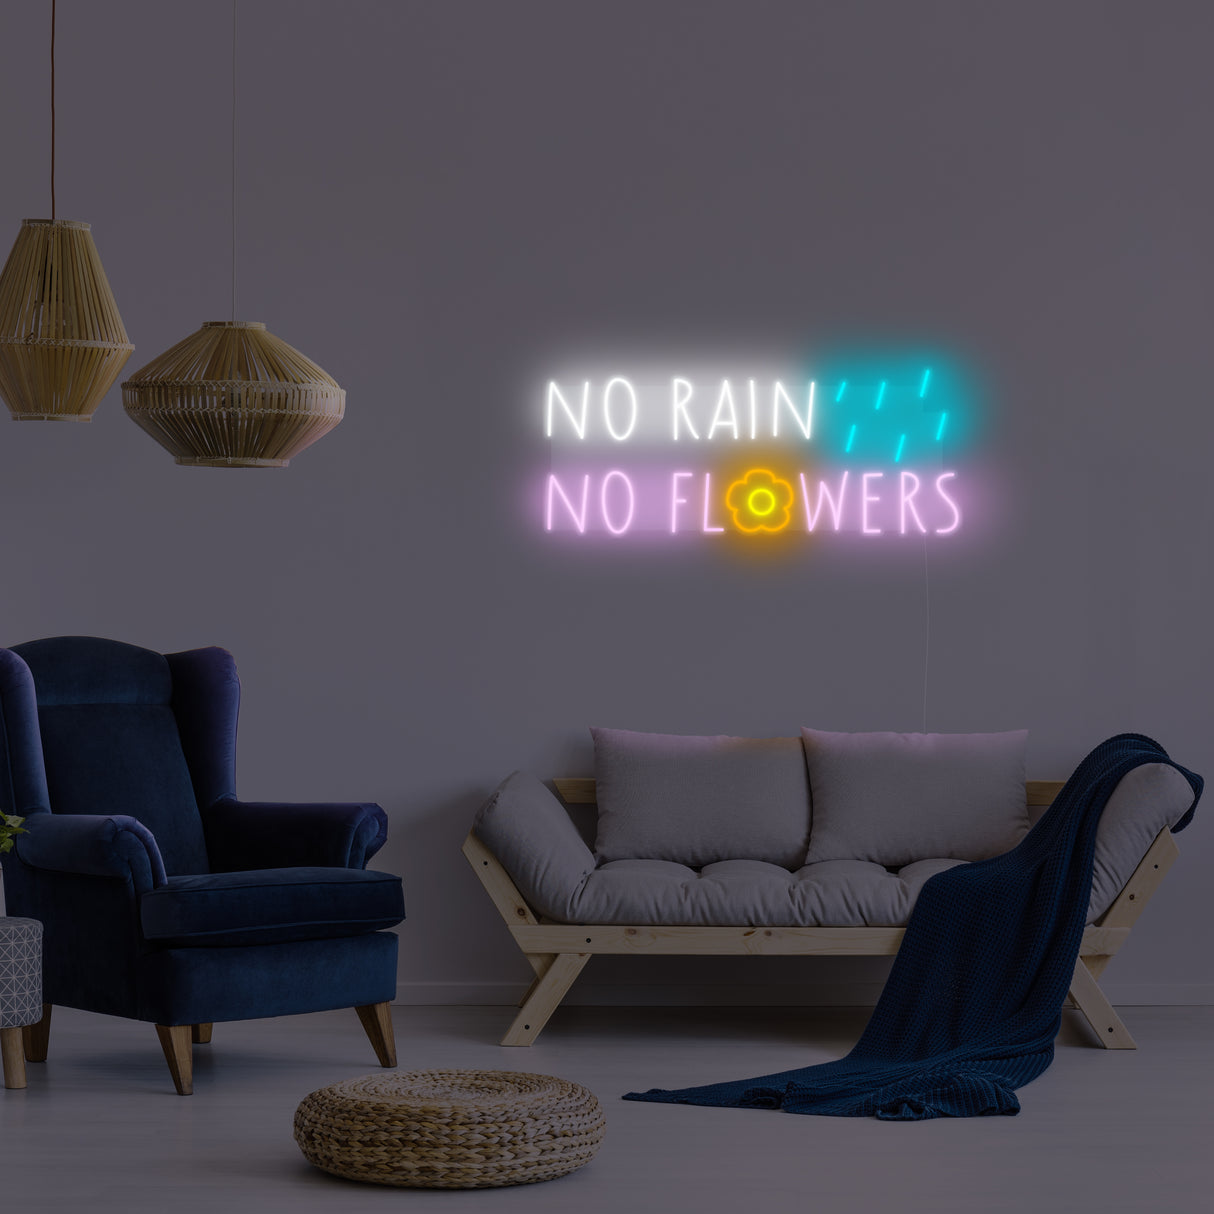 Néon LED mural - No rain no flowers